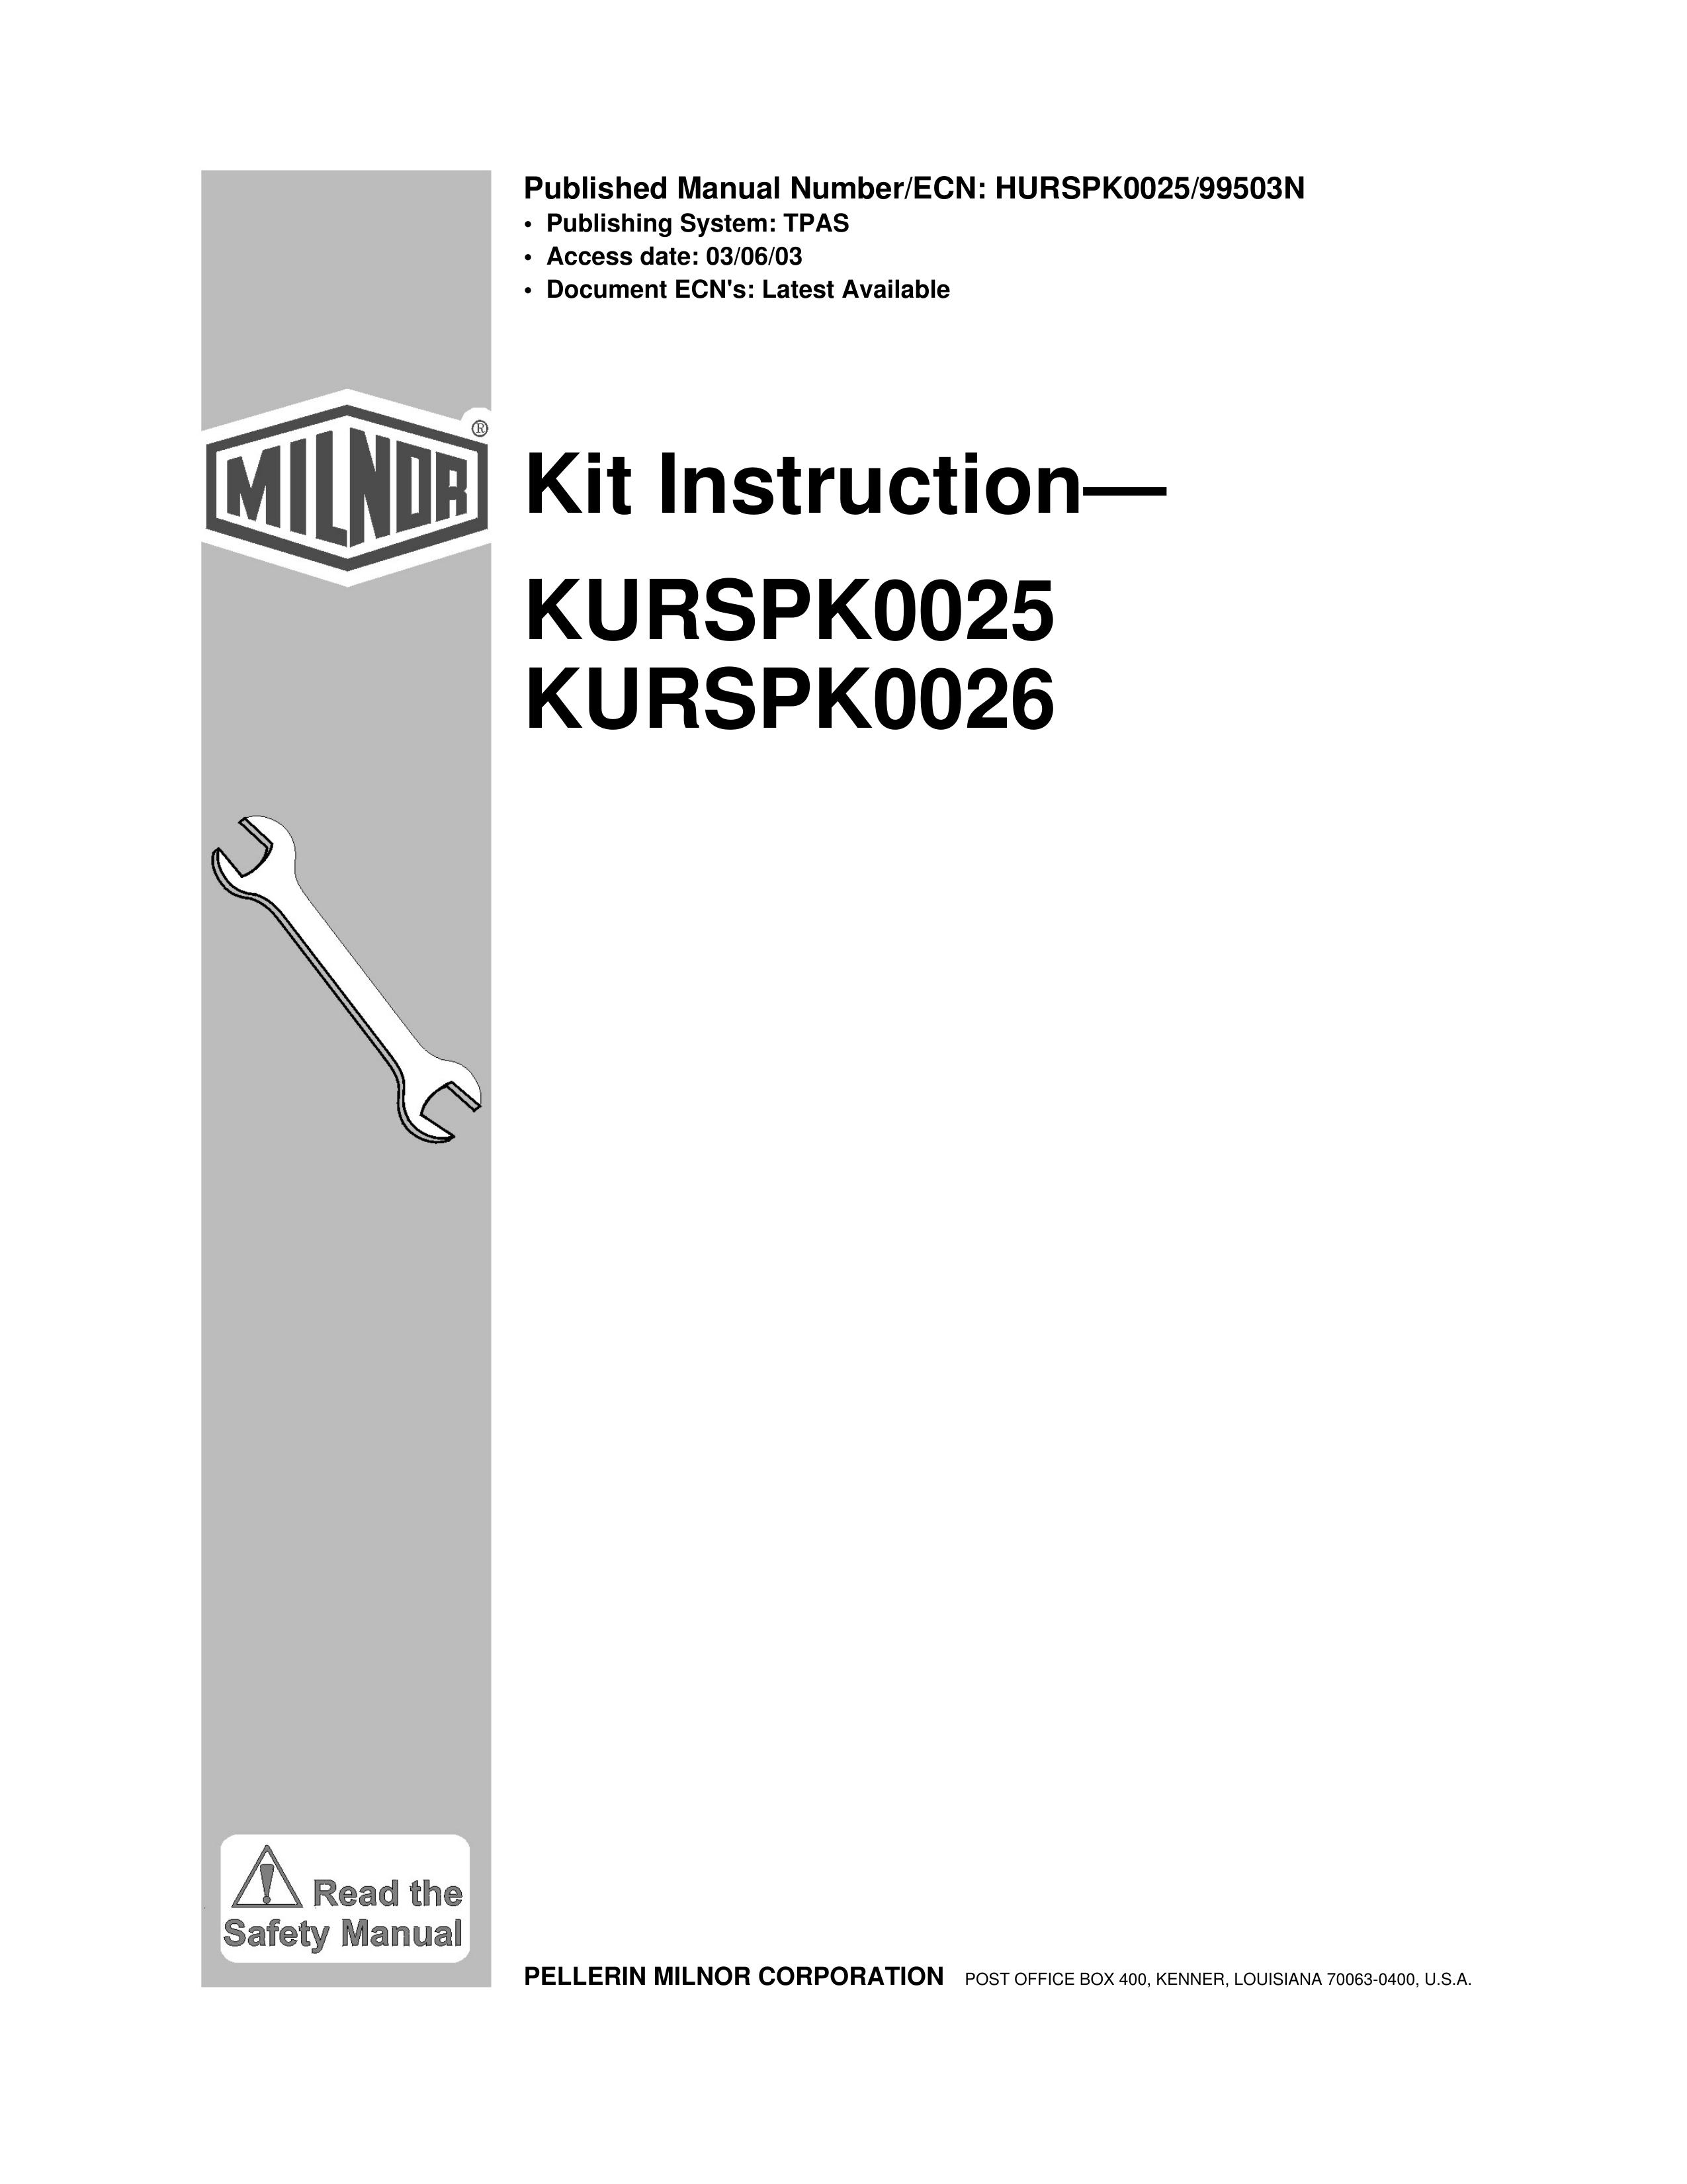 Milnor KURSPK0025 Clothes Dryer User Manual